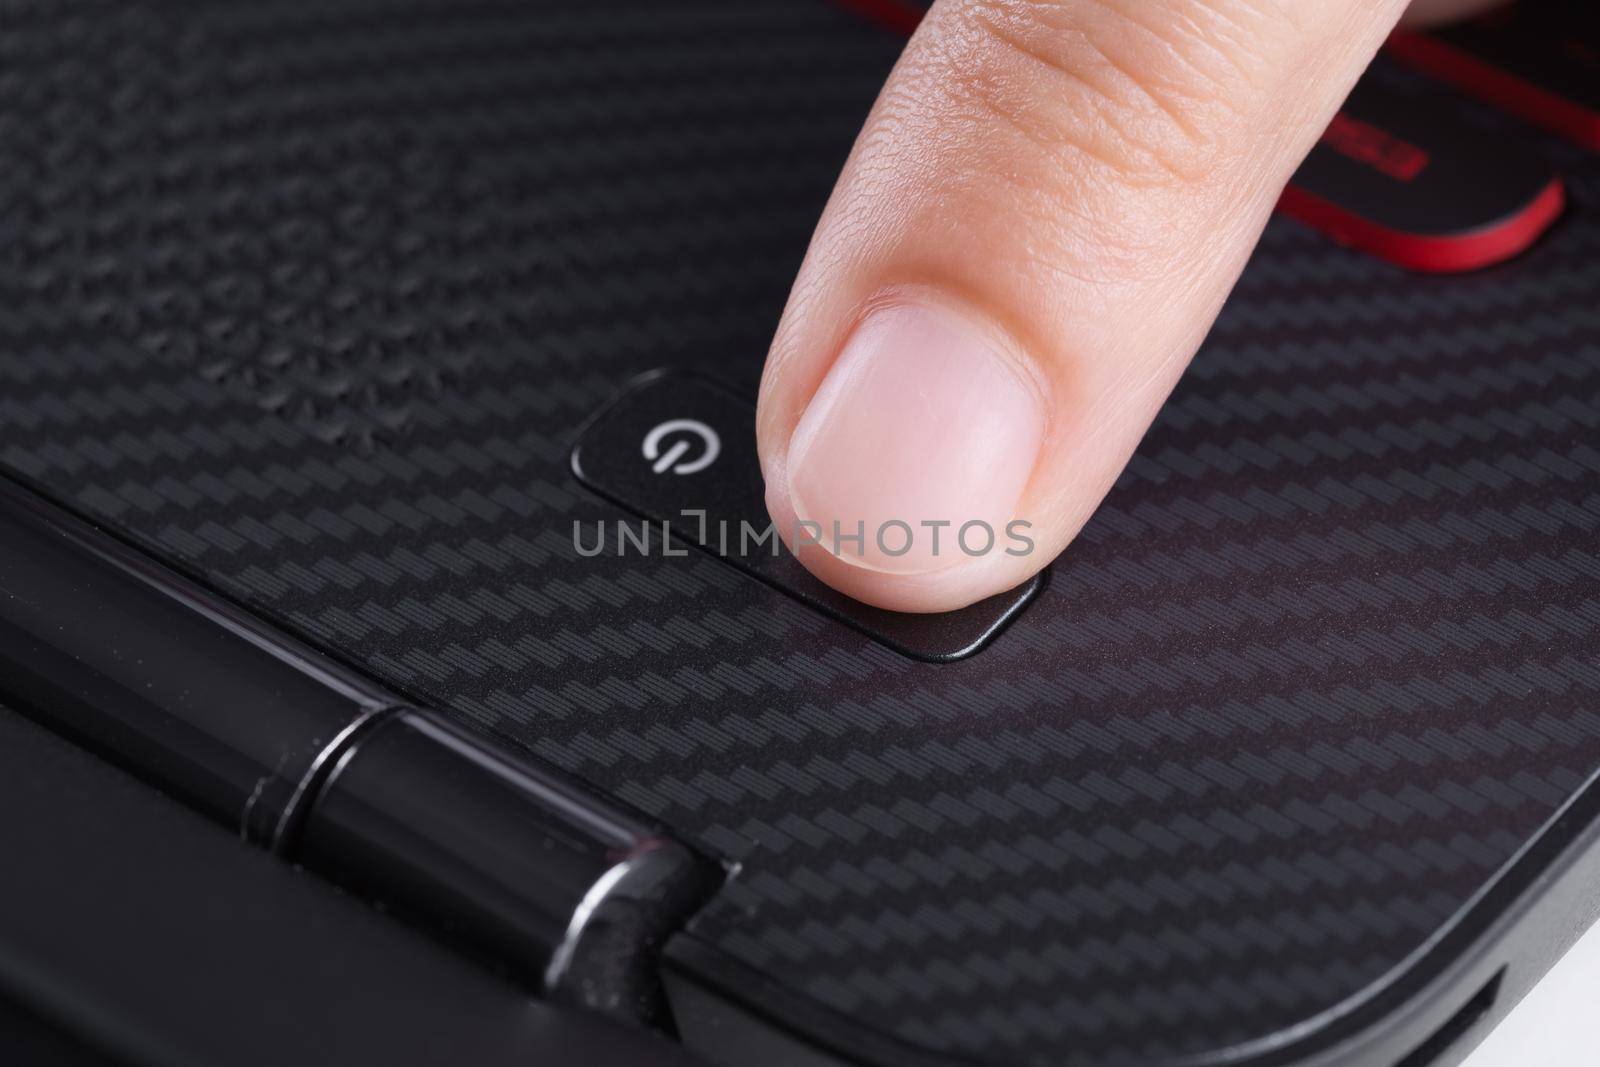 finger pushing power button on laptop keyboard by geargodz